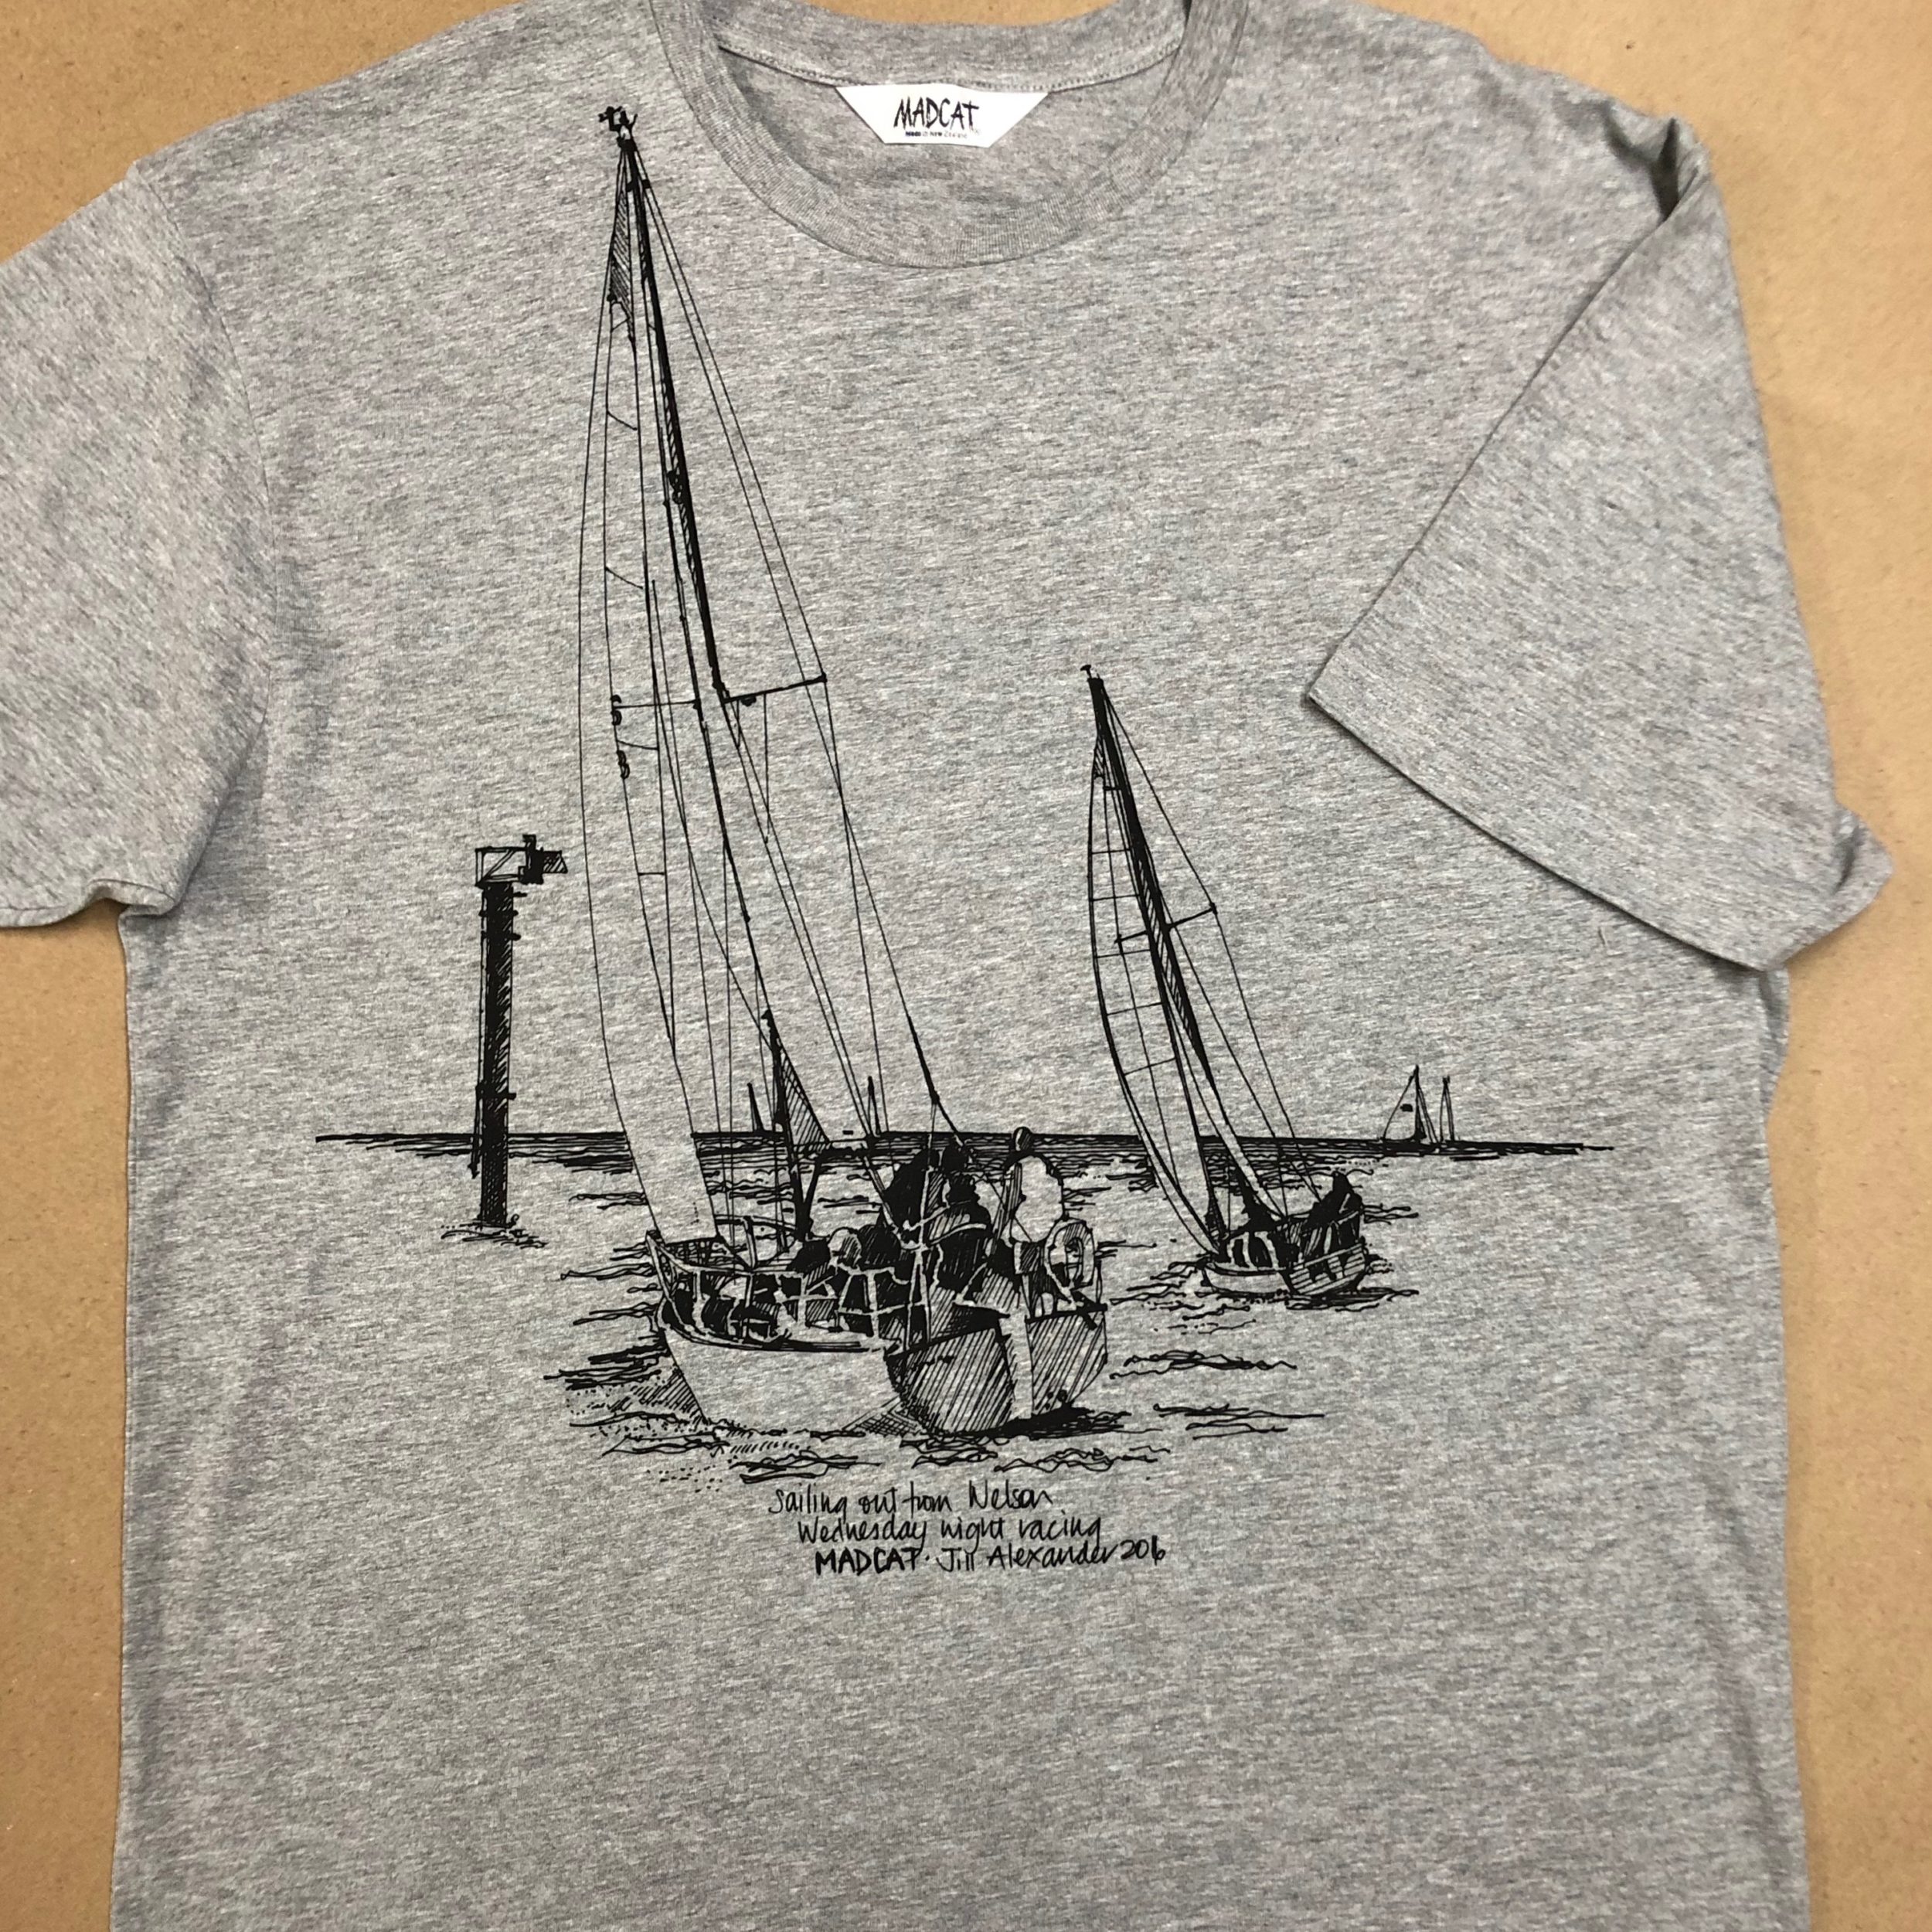 Sailing boat T shirt printed in grey marl, size xtra large.